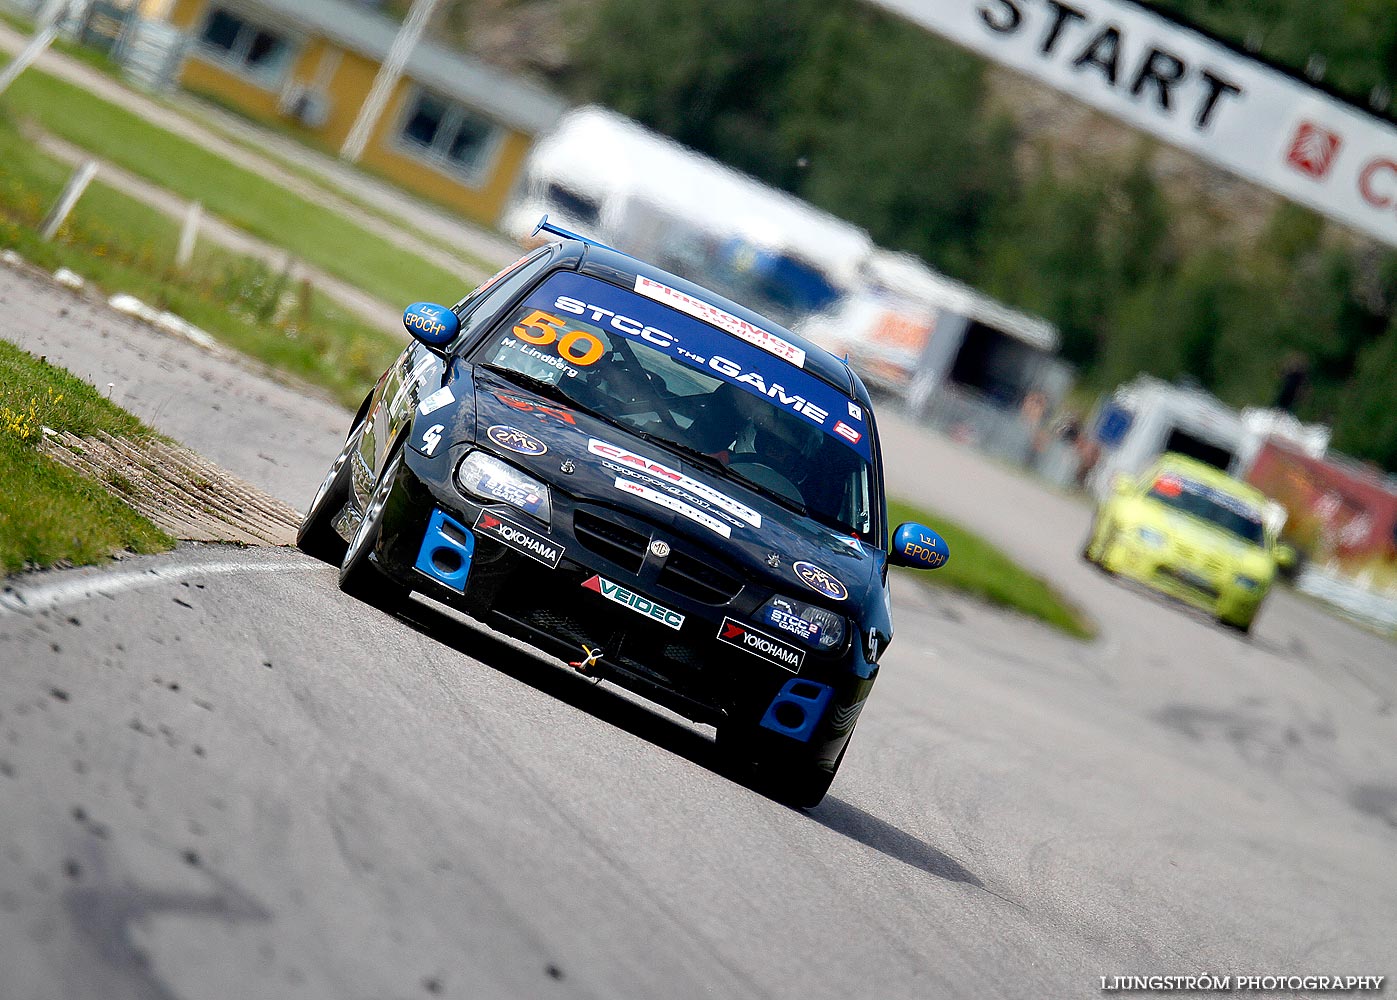 SSK Raceweek,mix,Kinnekulle Ring,Götene,Sverige,Motorsport,,2011,44497